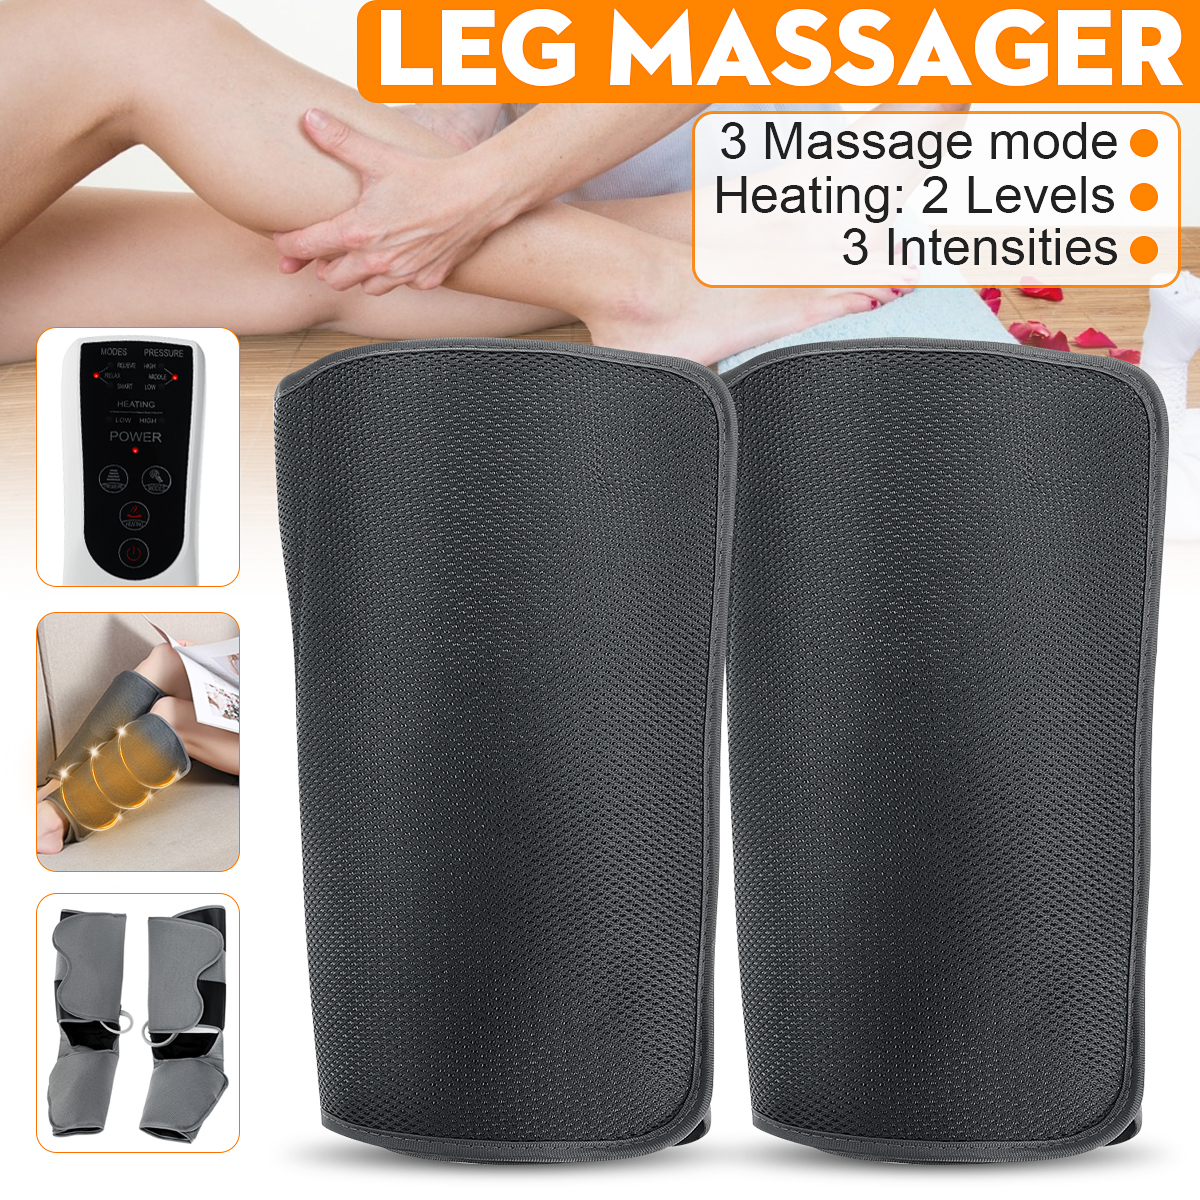 Electric-Leg-Massager-Intelligent-Overheat-Protection-Air-Pressure-Leg-Massager-Airbag-Kneading-Hot--1934343-1